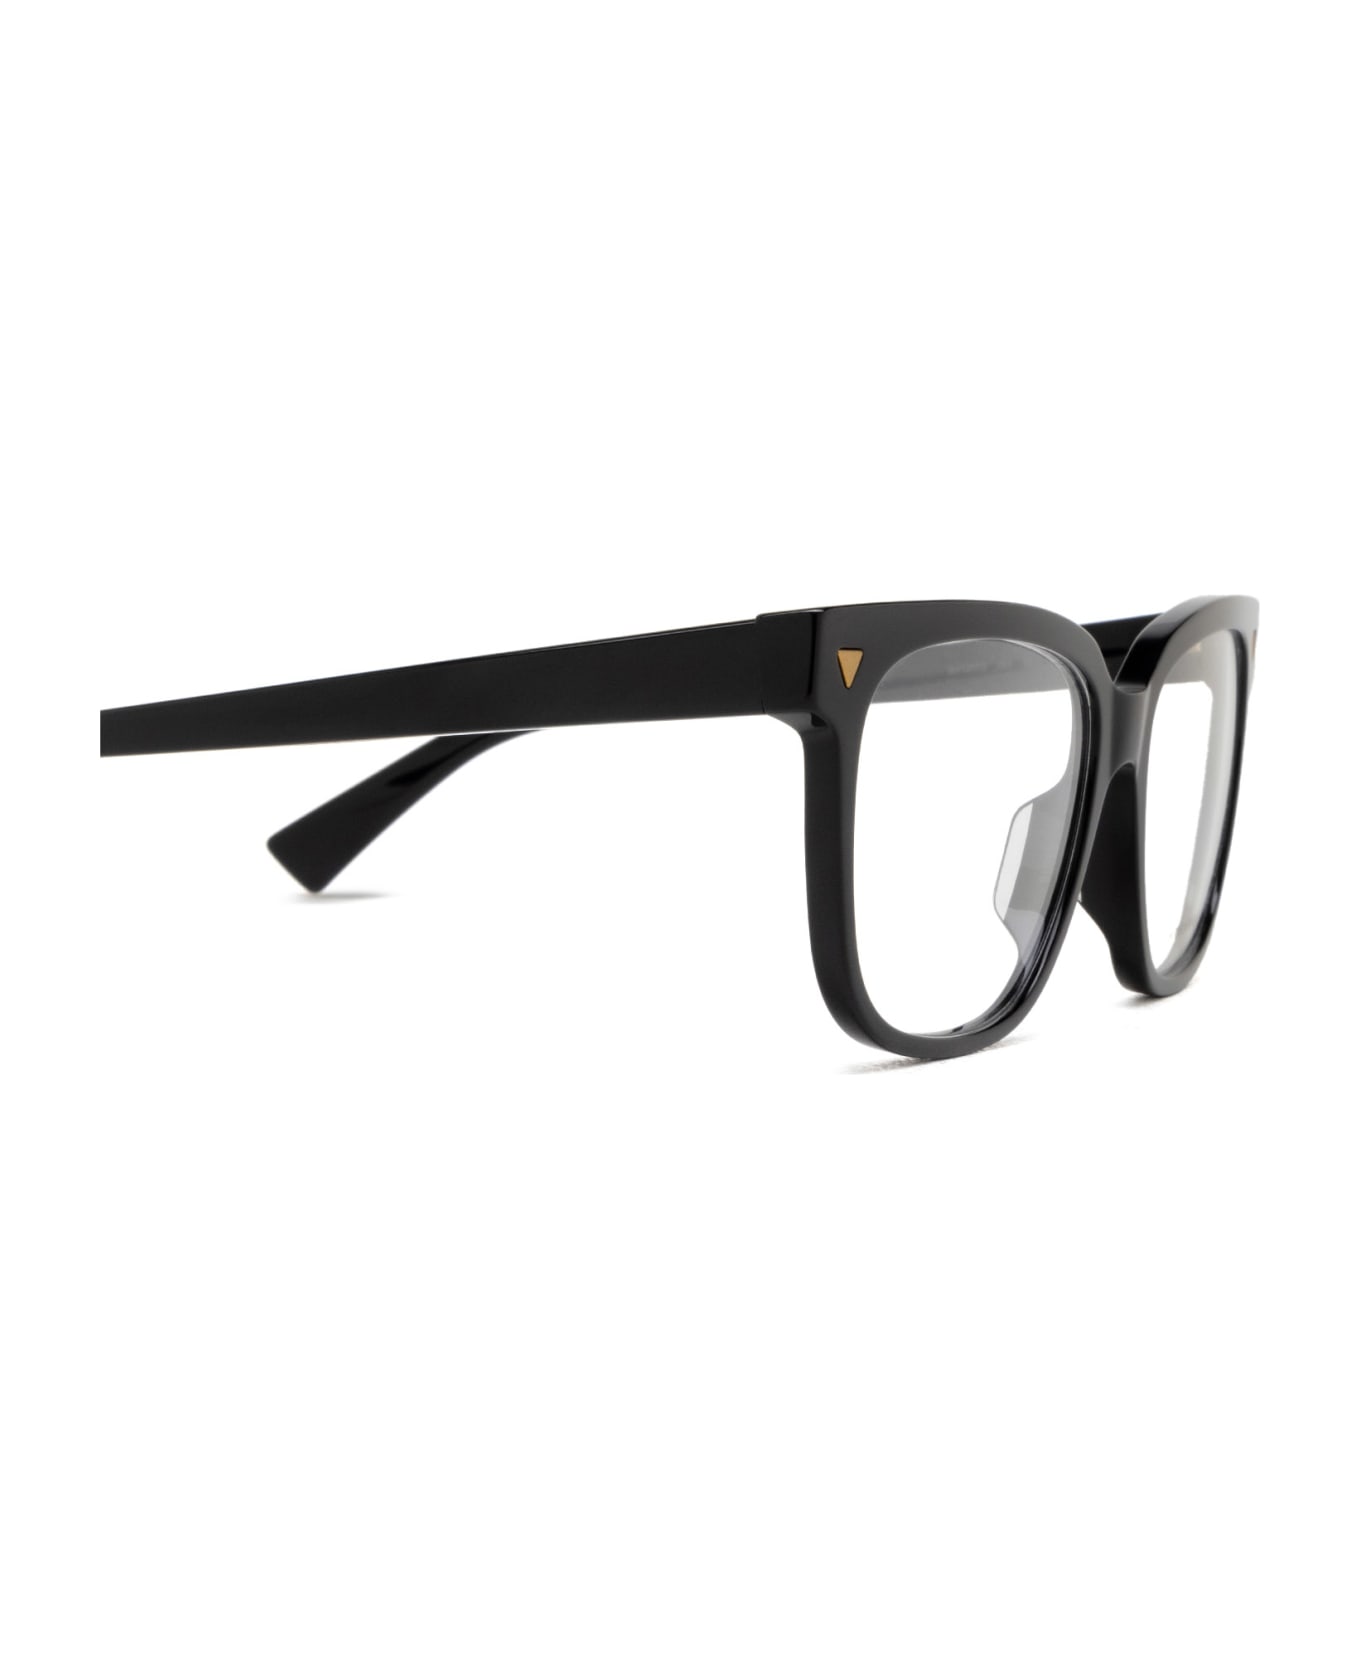 Bottega Veneta Eyewear Bv1257o Black Glasses - Black